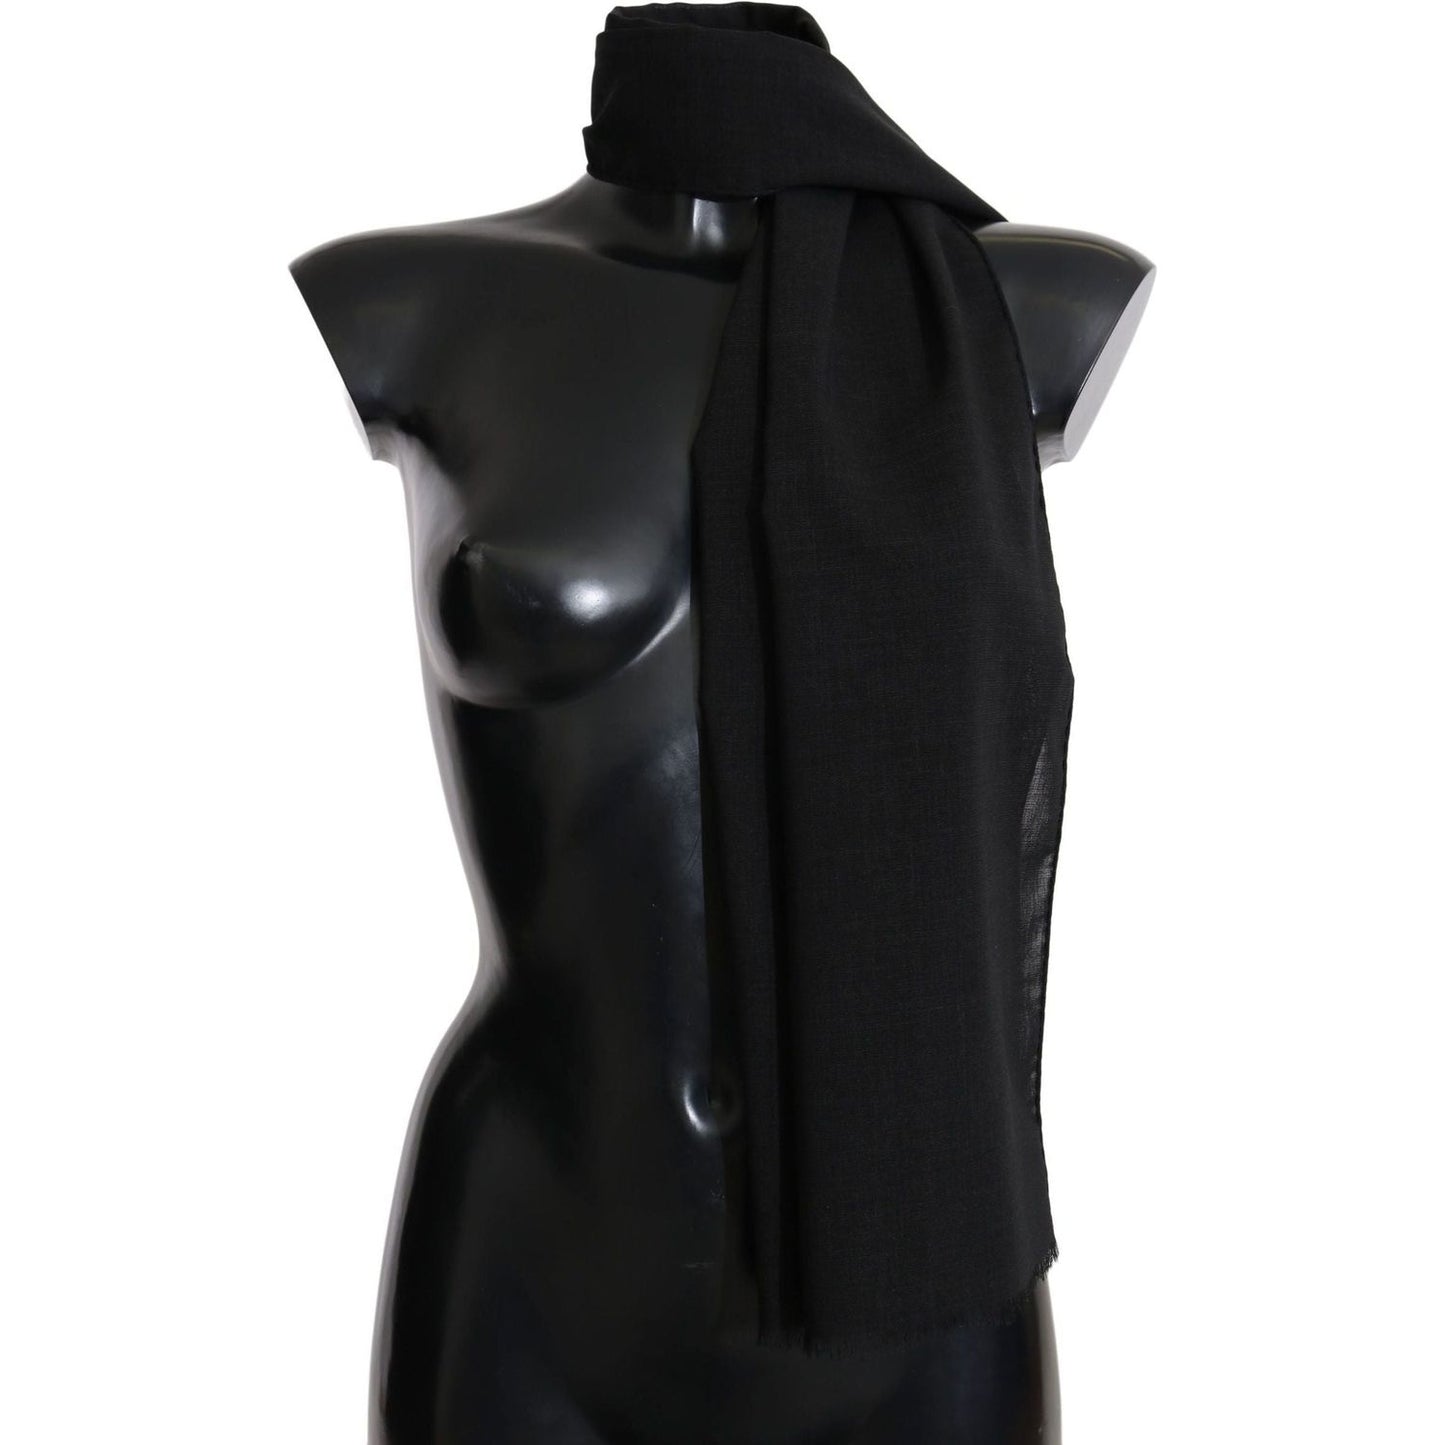 Dolce & Gabbana Elegant Black Wool Blend Scarf solid-black-wool-blend-shawl-wrap-70cm-x-200cm-scarf